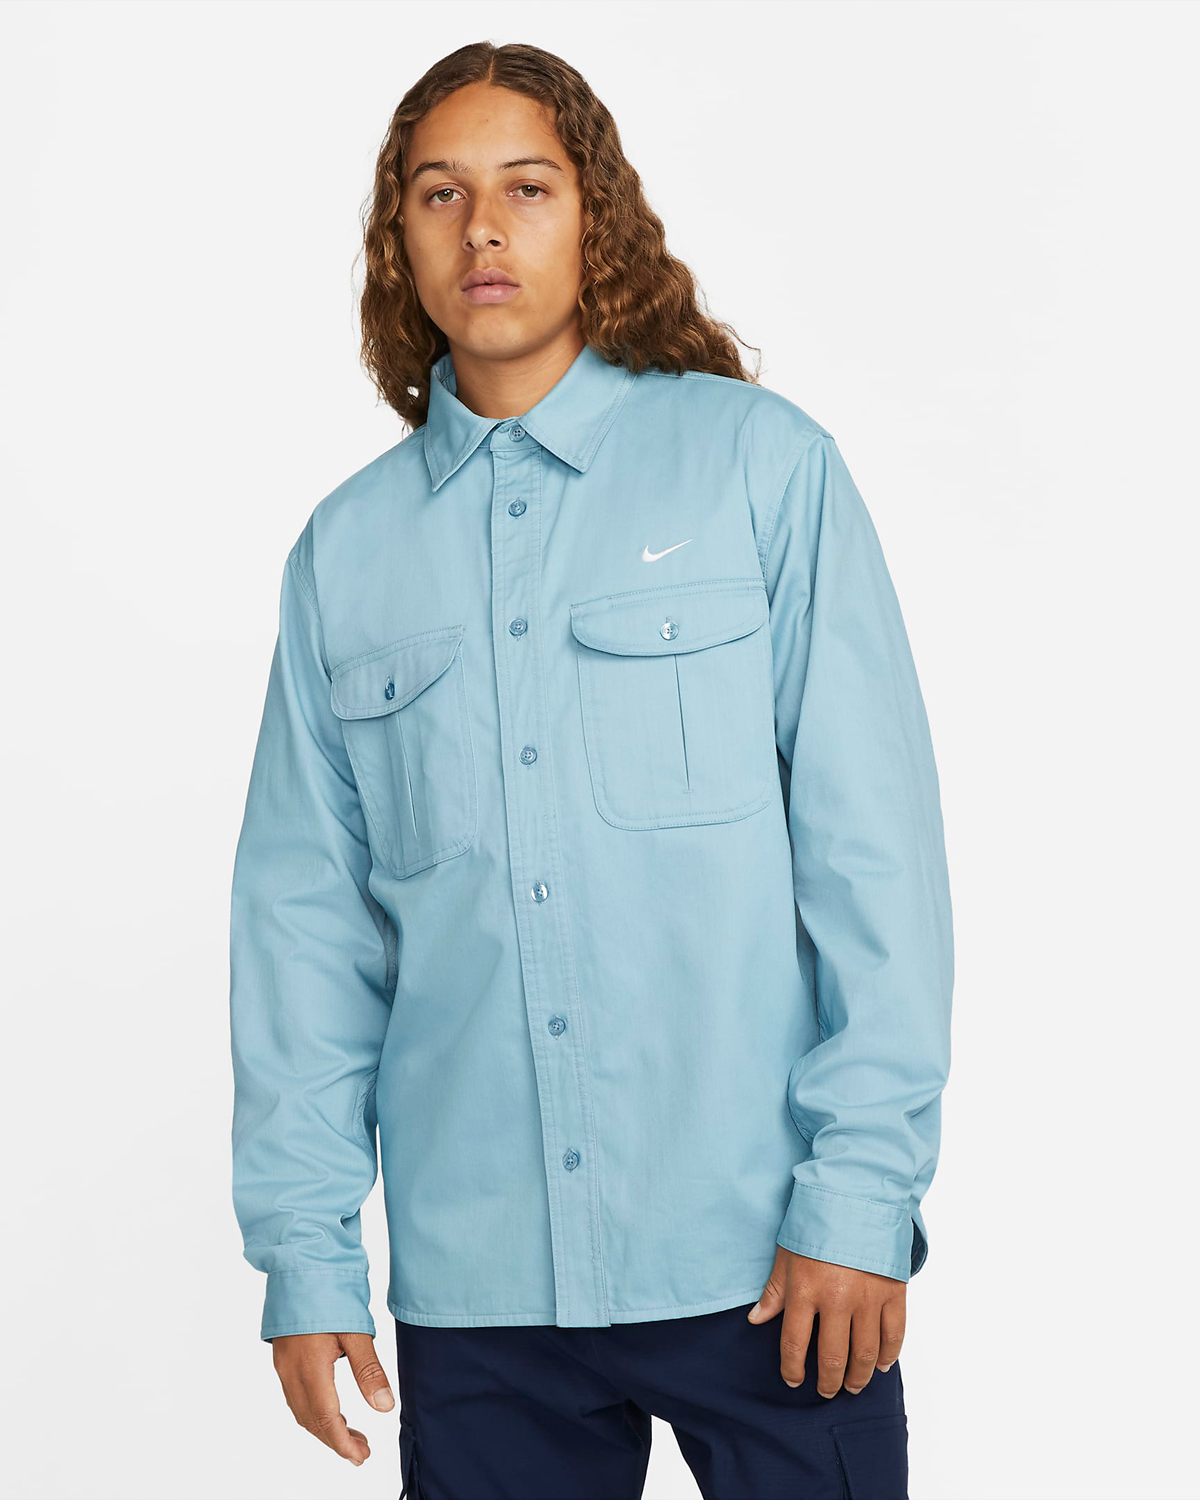 Nike-SB-Long-Sleeve-Button-Up-Shirt-Worn-Blue